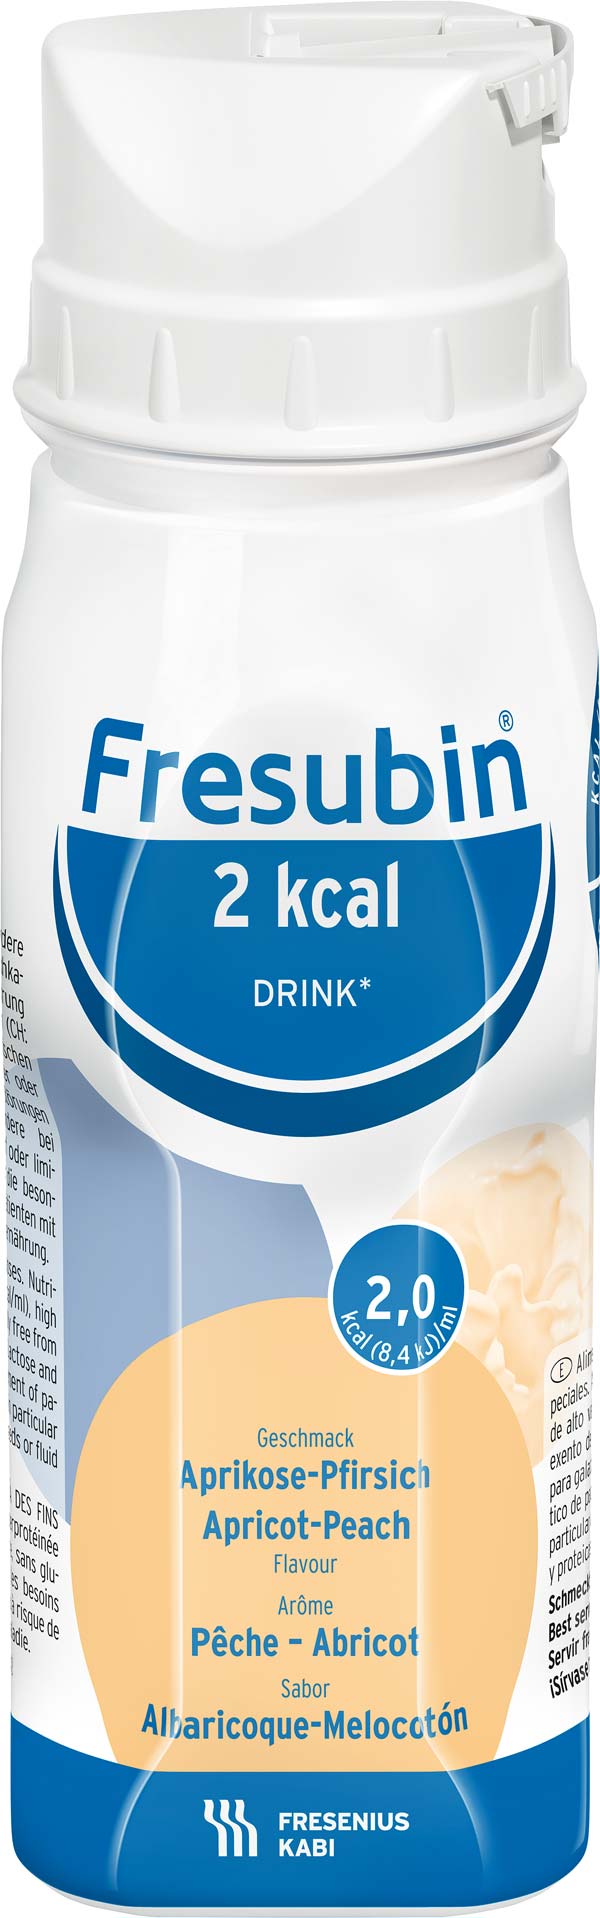 Fresubin 2kcal Drink Aprikose-Pfirsich 24x200ml Trinknahrung - so schmeckt Lebensqualität unter Trinknahrung Shop > Fresenius-Kabi